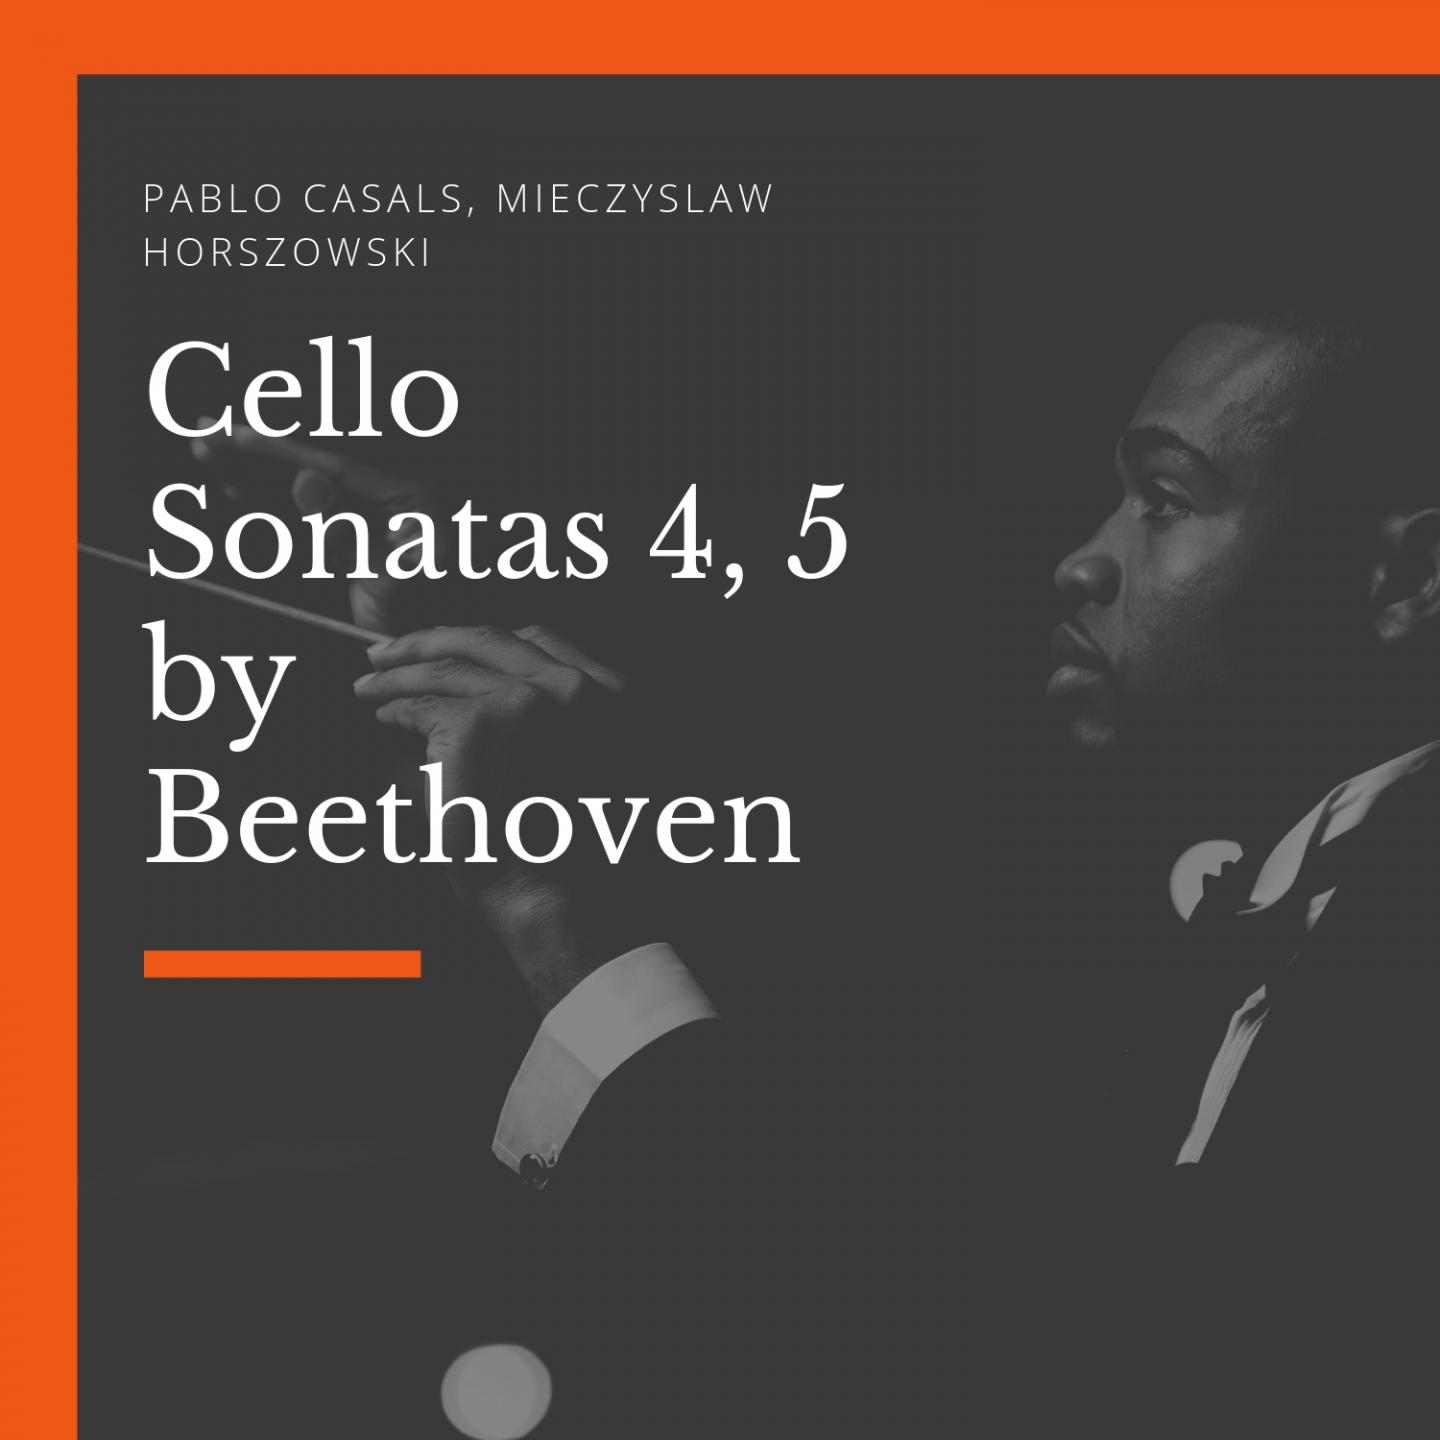 Cello Sonata, No. 4, in C Major, Op. 102 No. 1: II. Adagio - Tempo D'Andante - Allegro Vivace